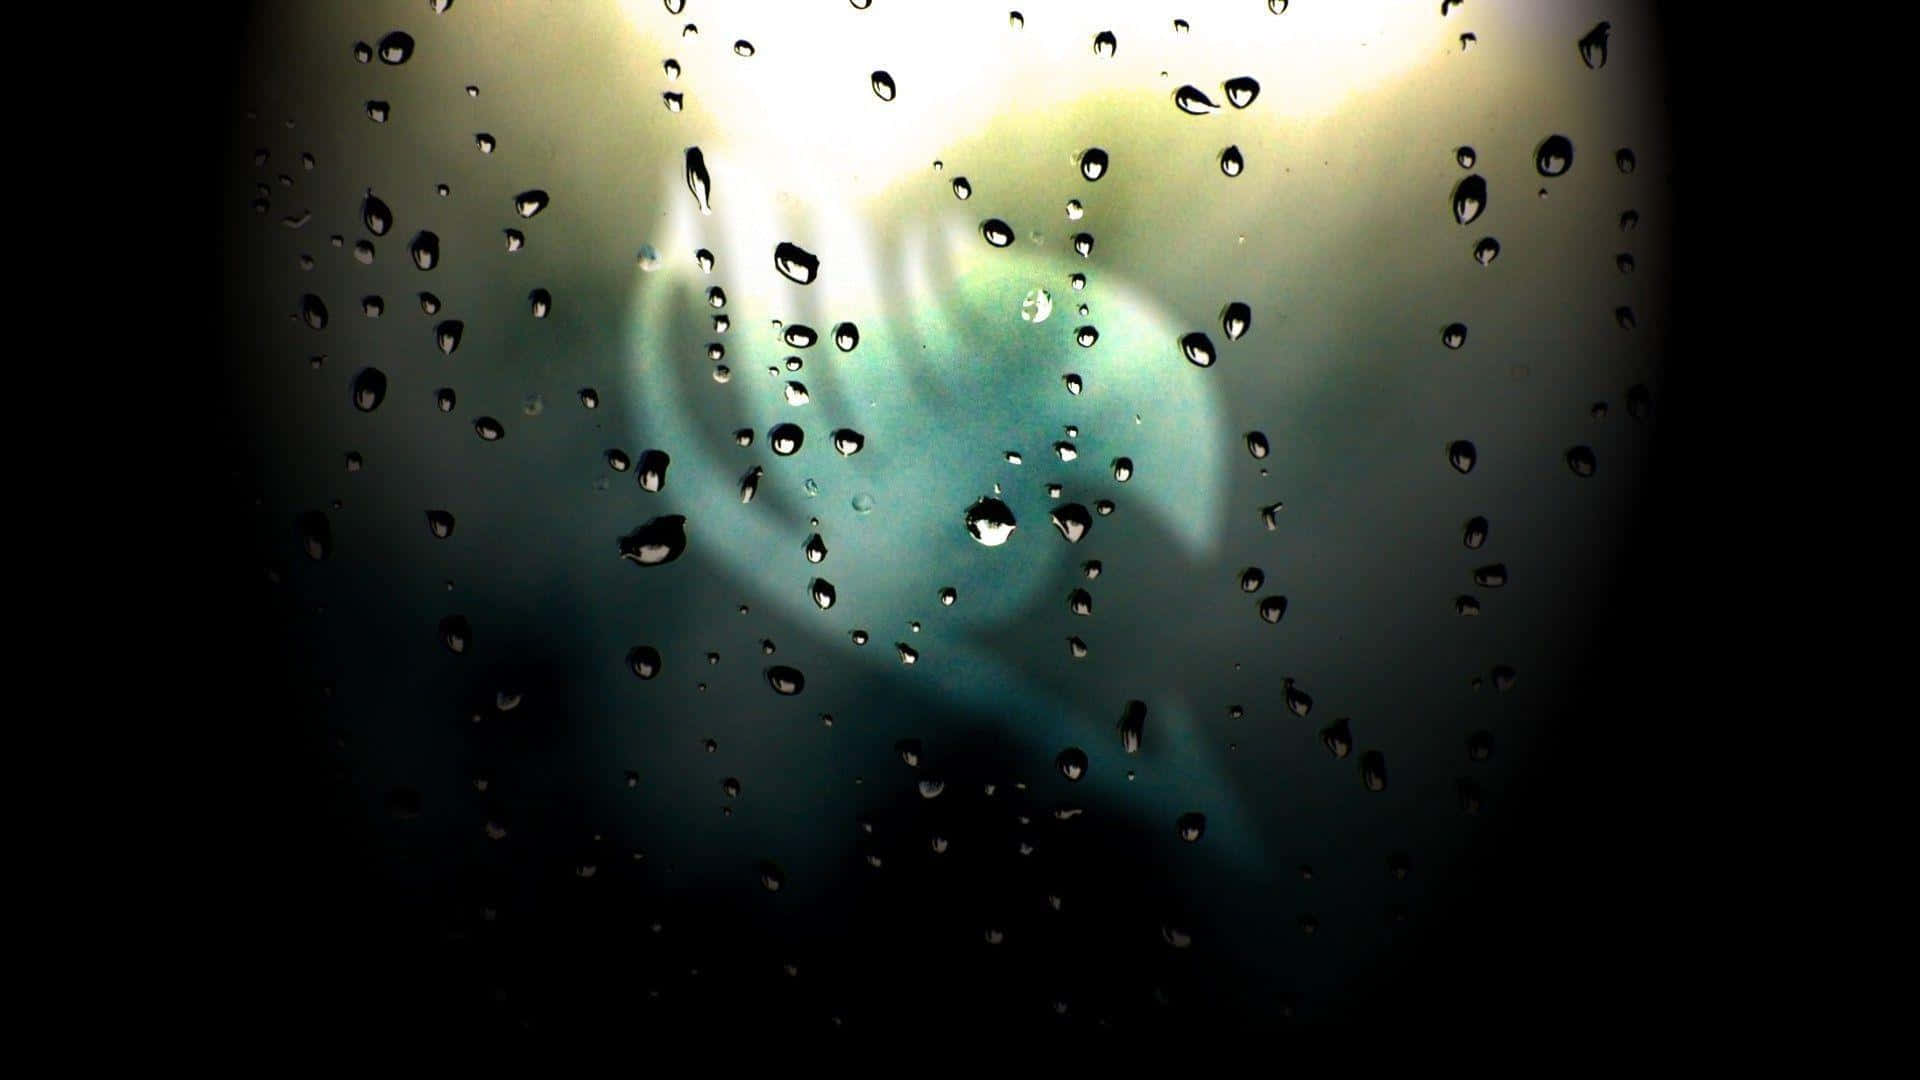 A single drop of rain captured against a bright, azure sky.